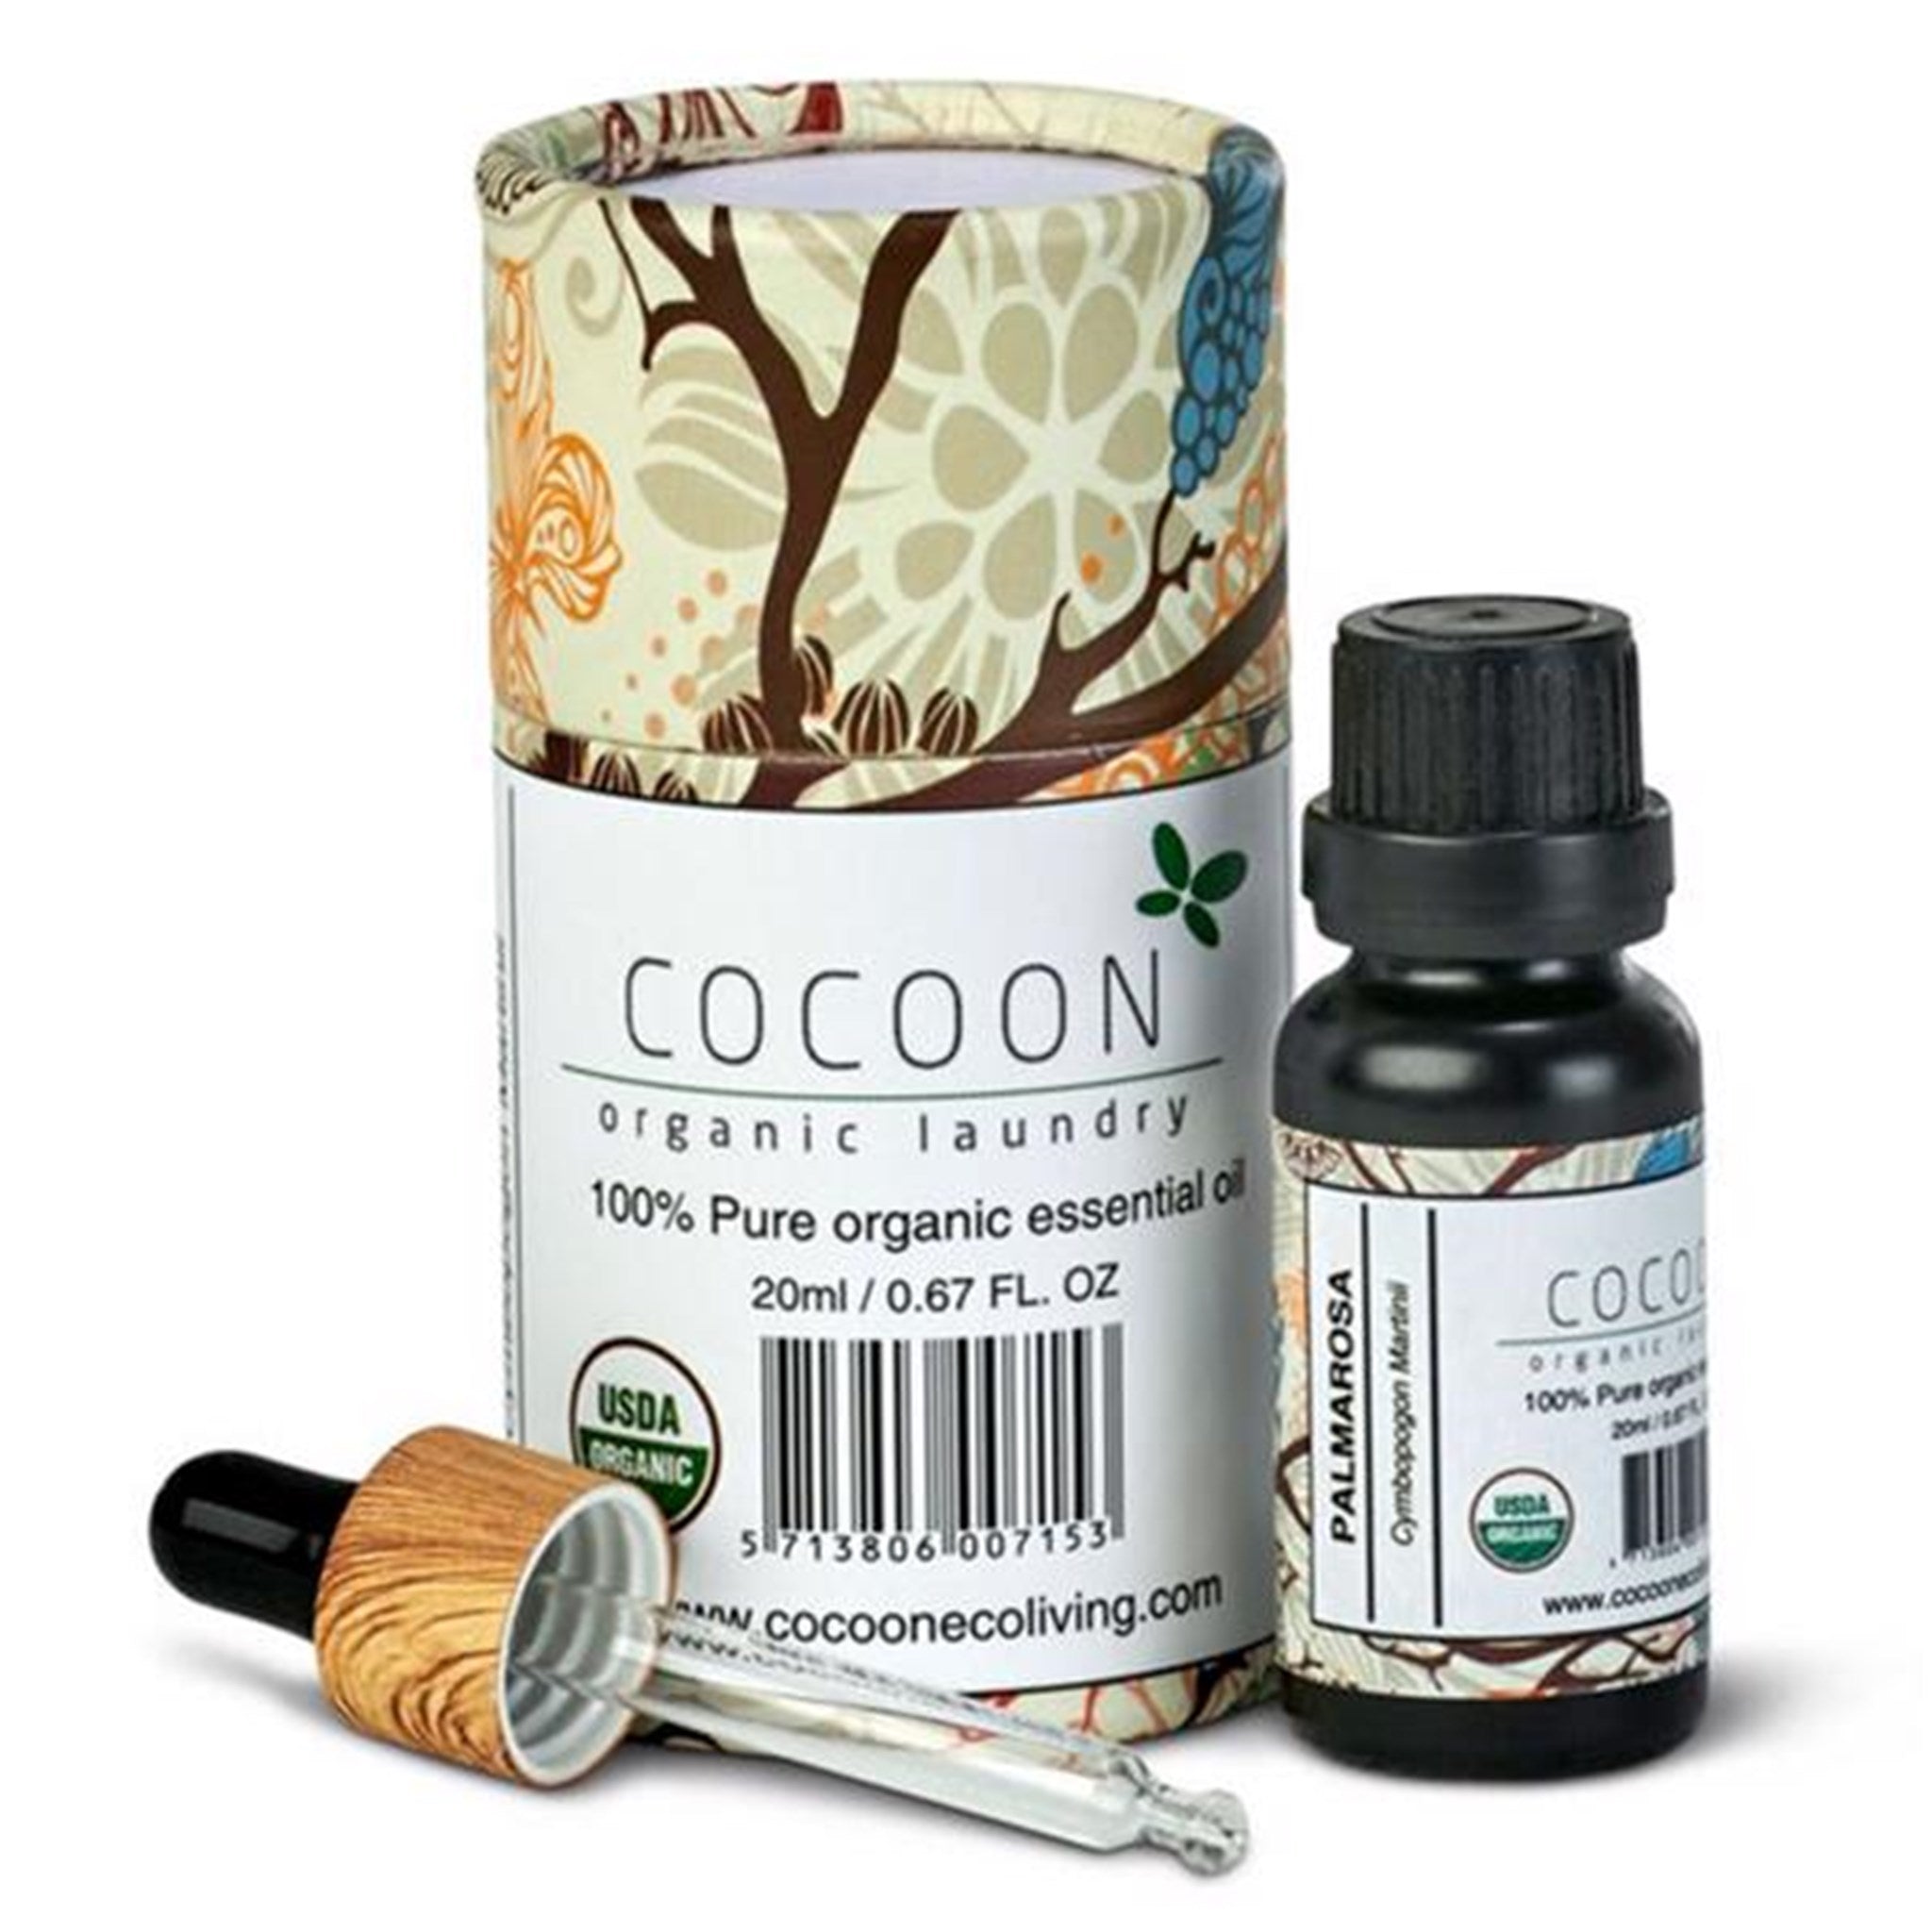 Cocoon Organic Laundry Palmarosa Oil 20 ml.